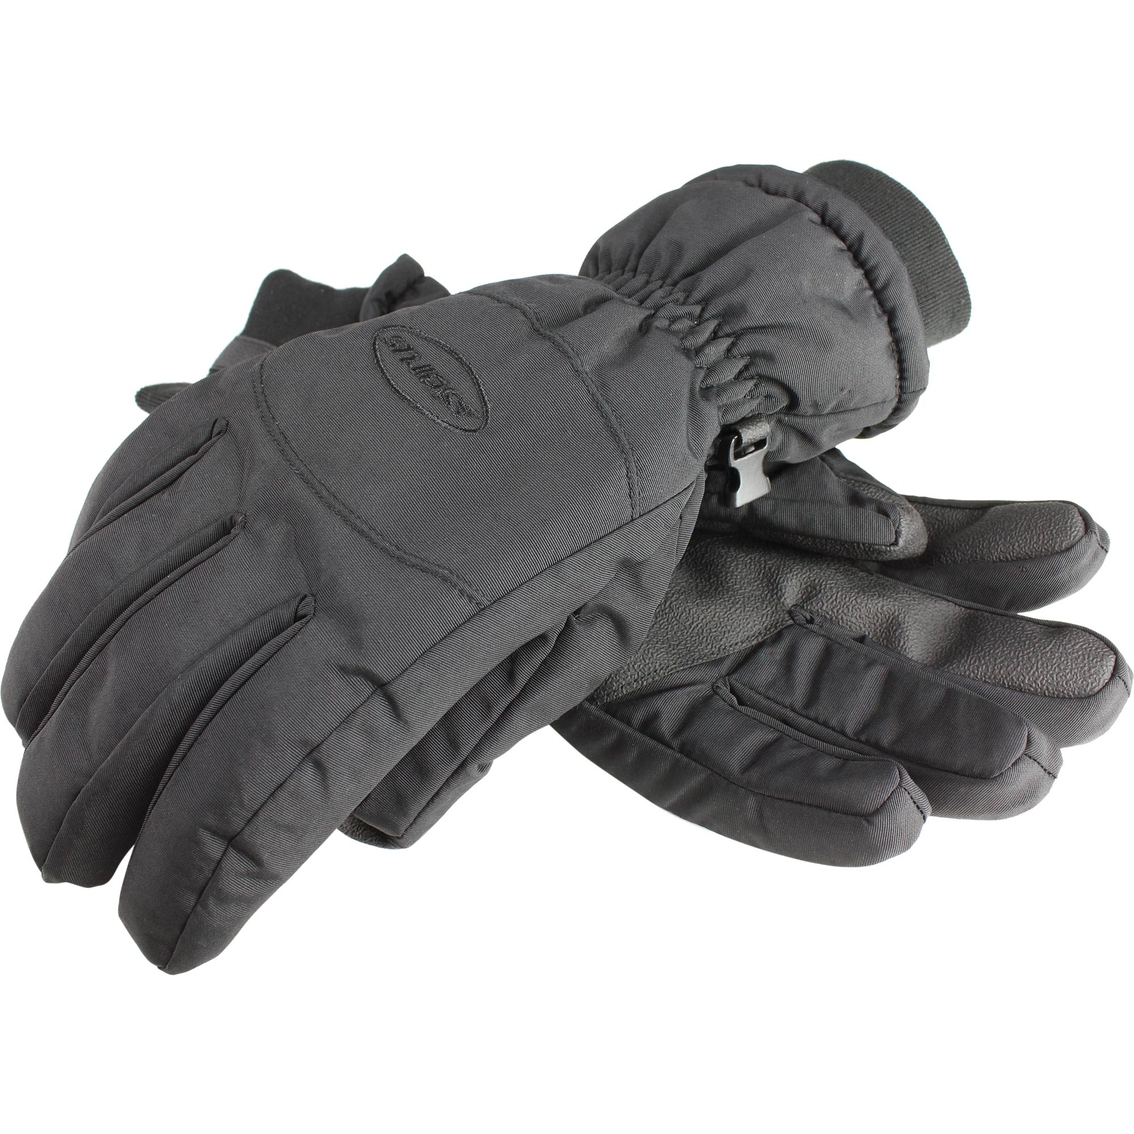 Seirus Innovation 1320 Eclipse Gloves